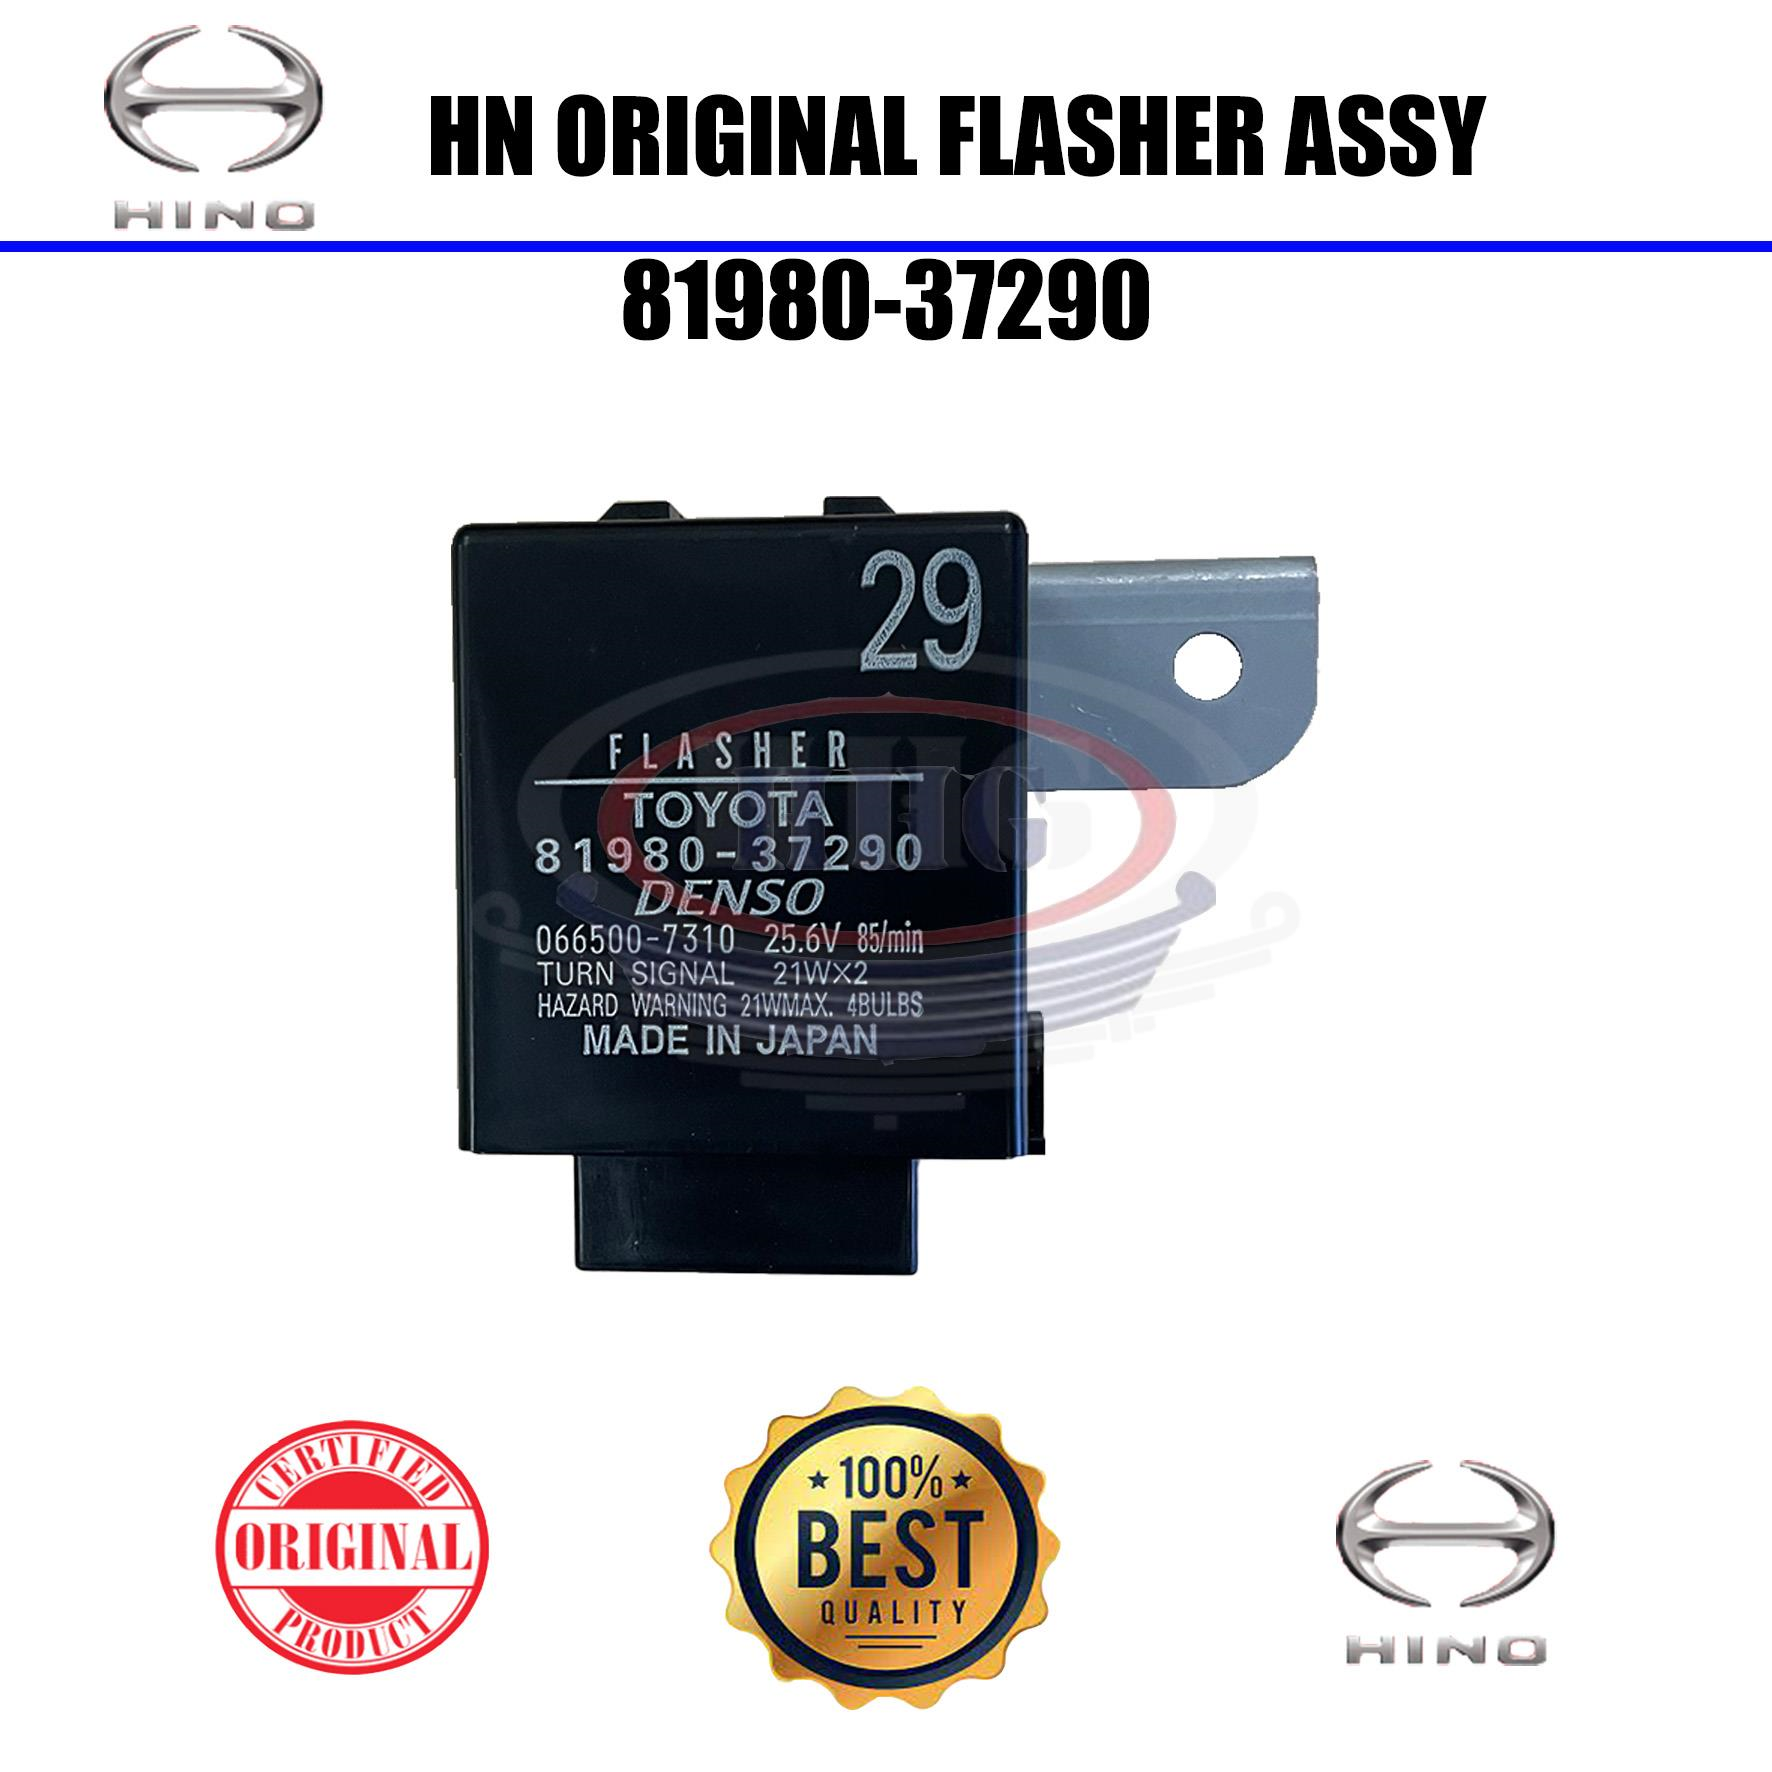 Hino Original WU600 Flasher Unit(81980-37290)